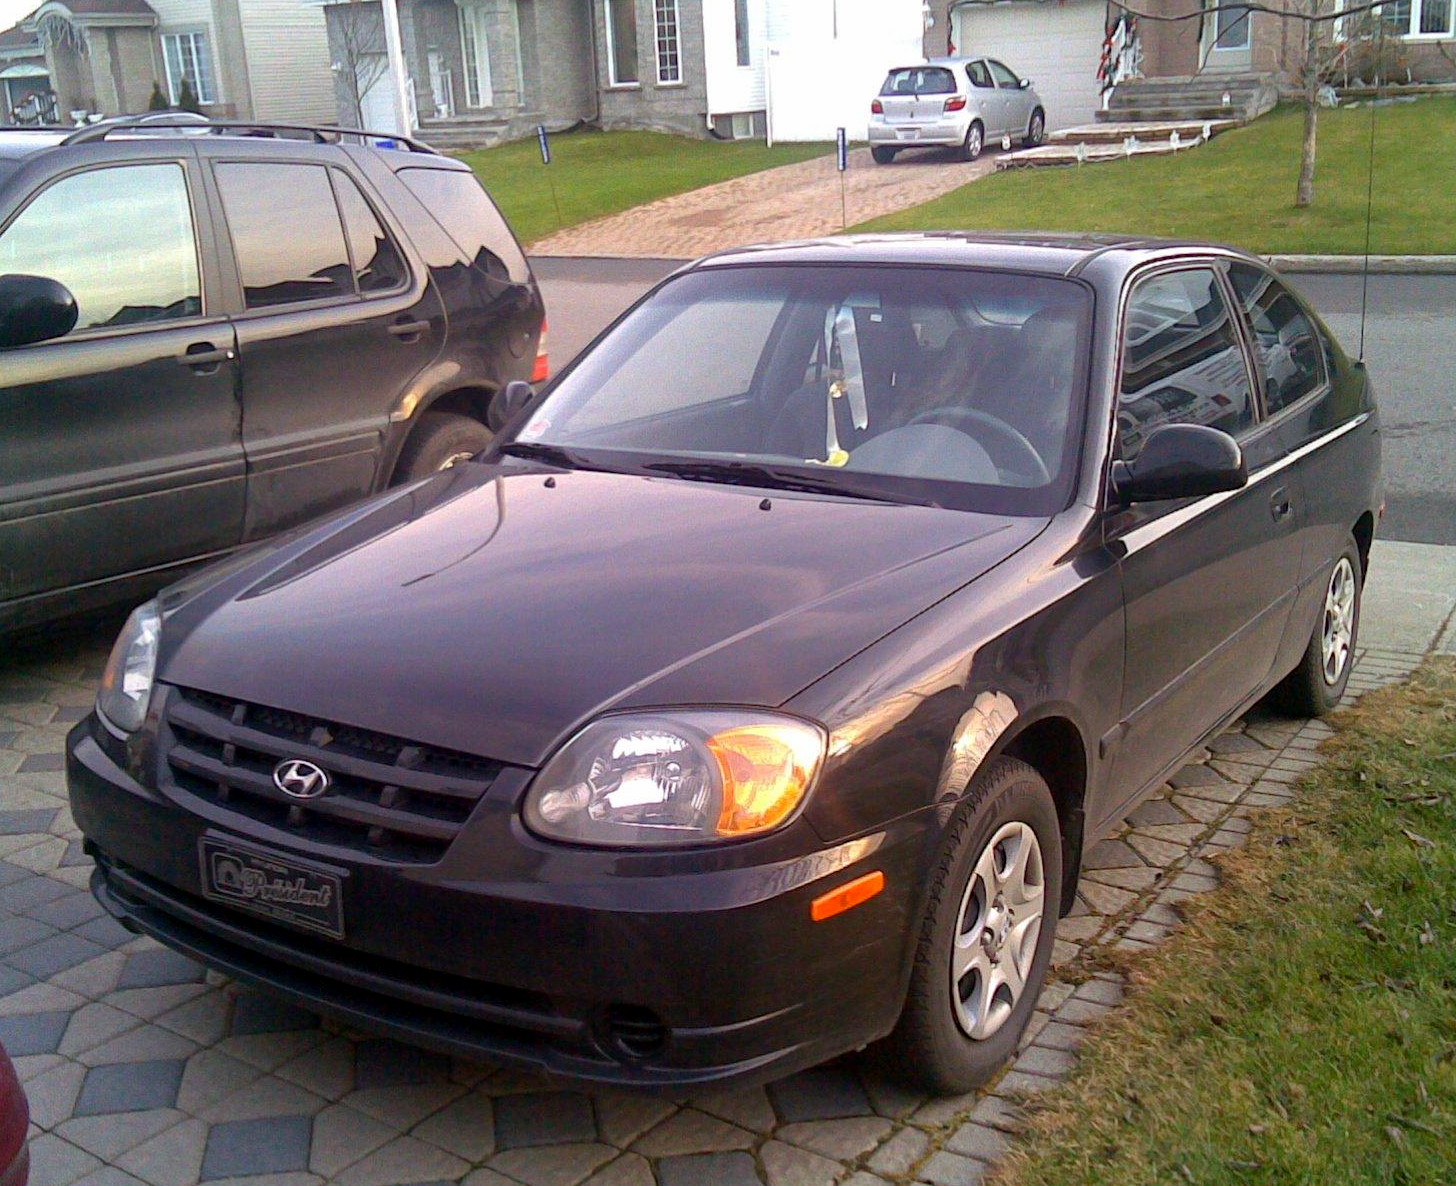 File:Hyundai Accent Hatchback 2003-2006.jpg - Wikimedia Commons